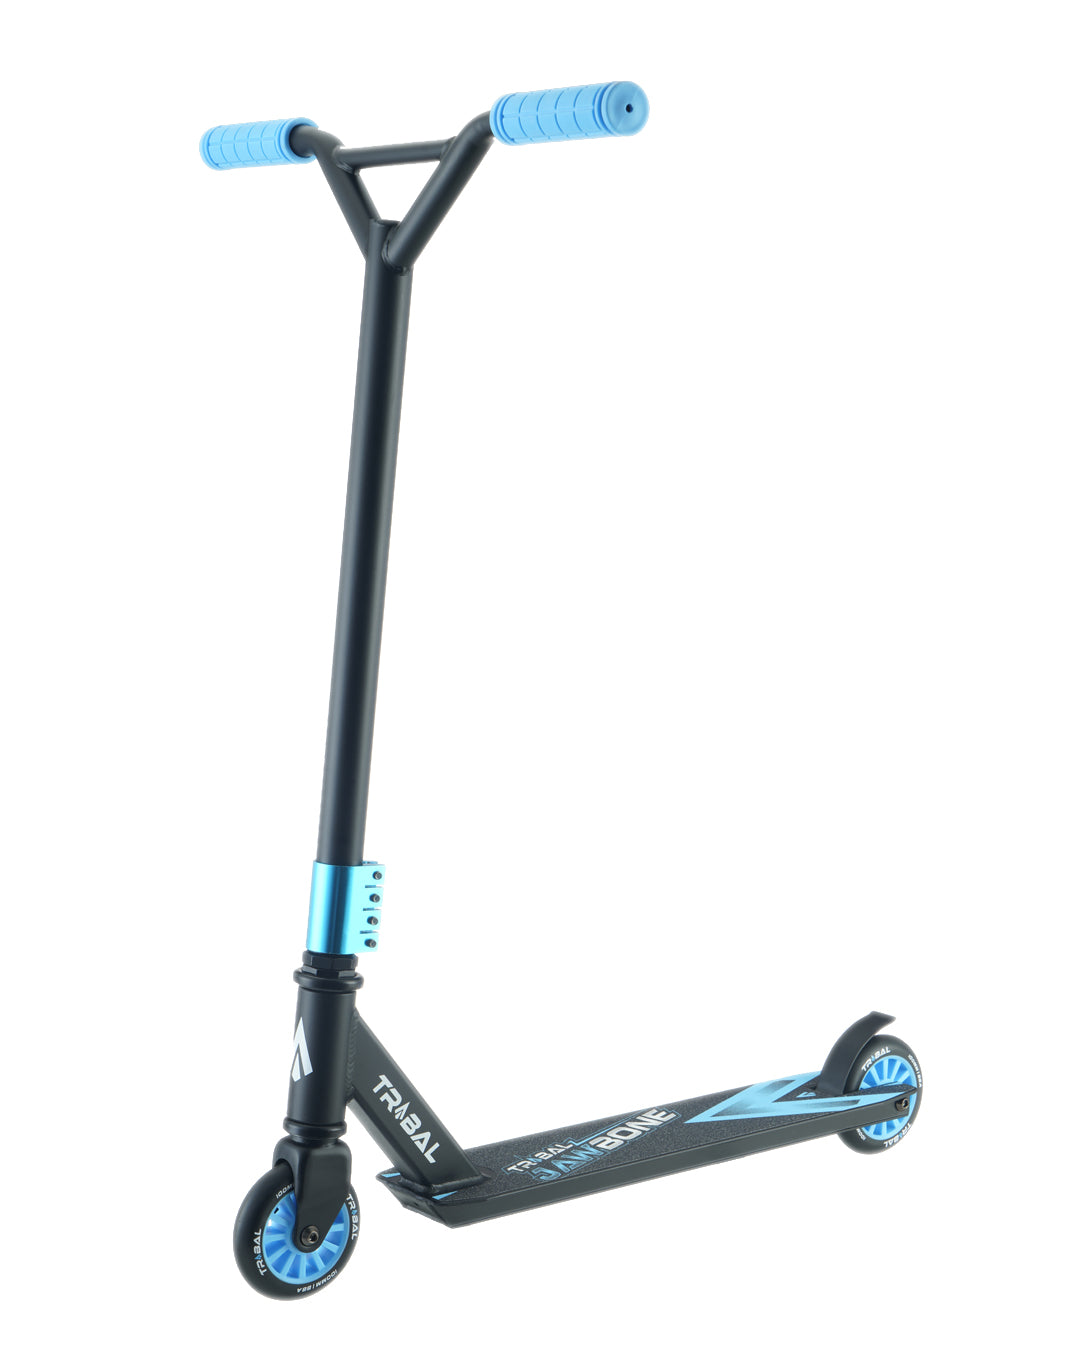 Scooter--jawbone-blue-main.jpg